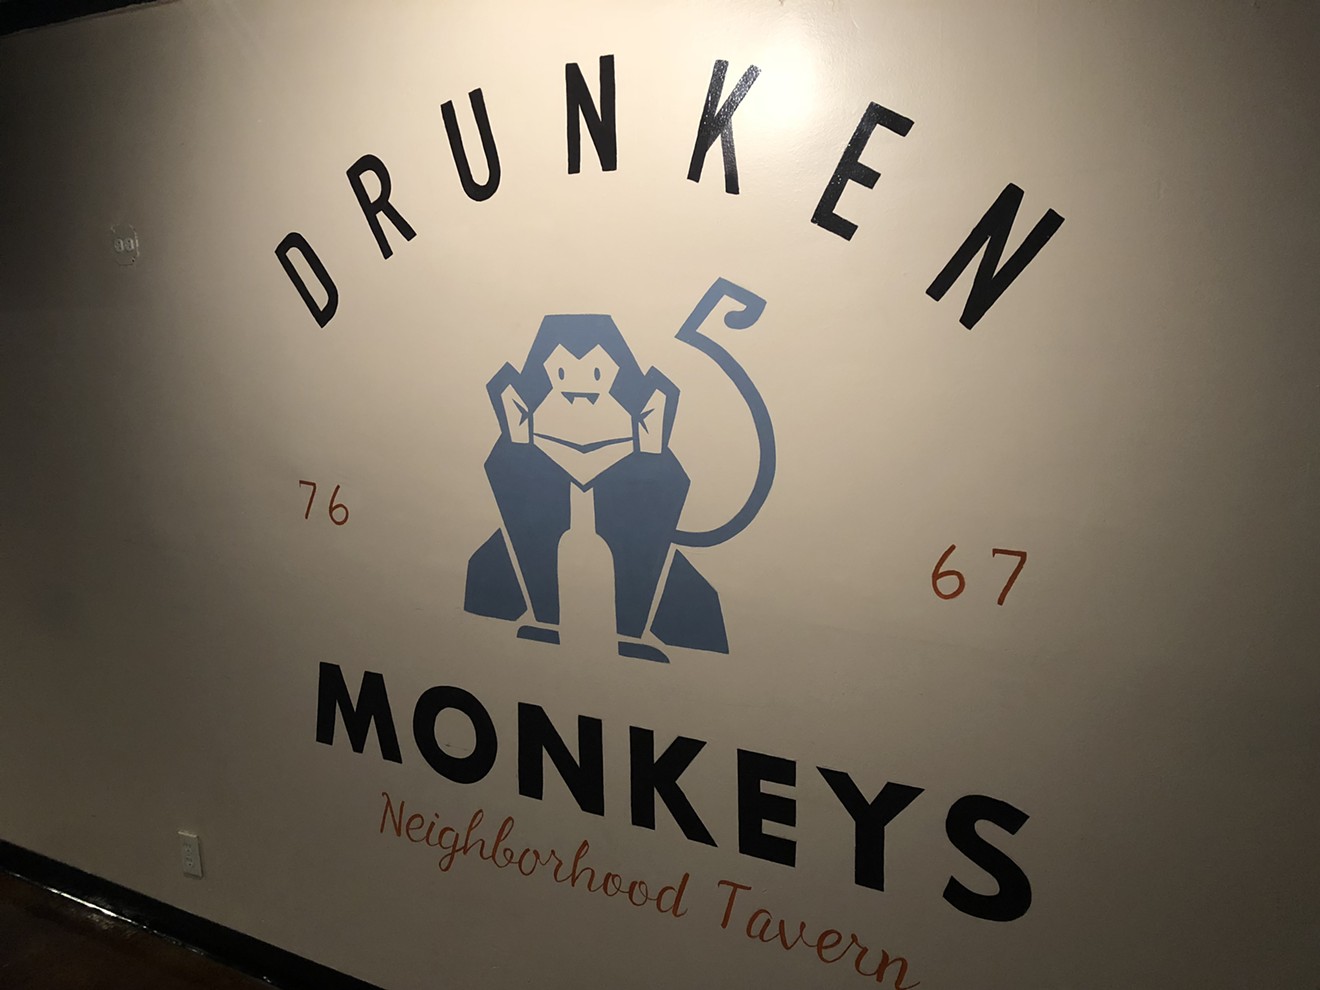 Drunken Monkeys Neighborhood Tavern started monkeying around just over a year ago at 7667 North Washington Street.